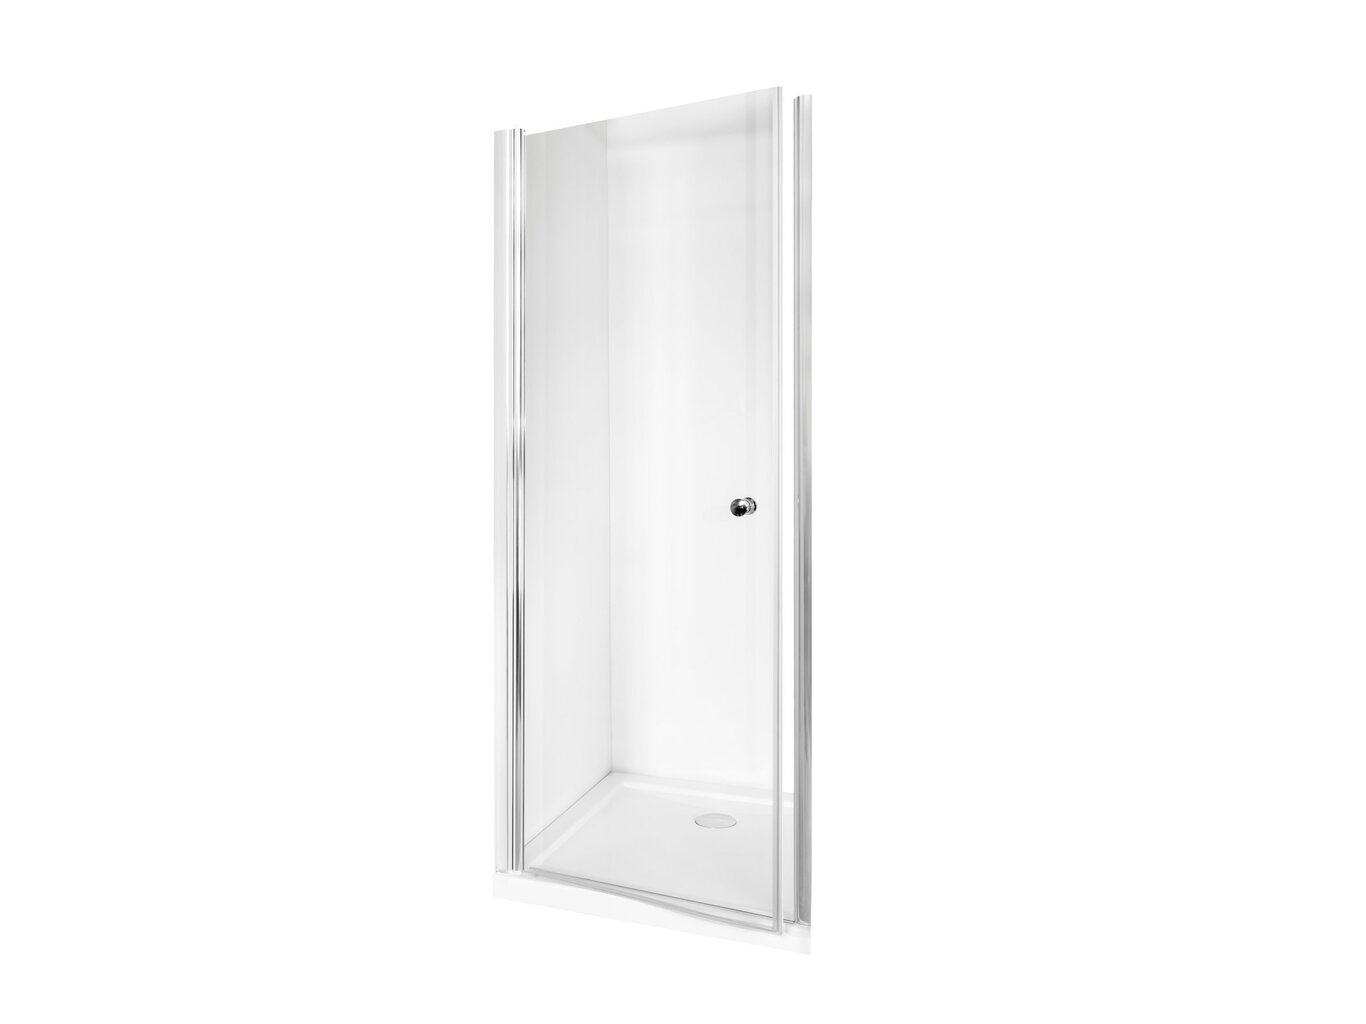 Dušo durys Besco Sinco, 80,90 x 195 cm kaina ir informacija | Dušo durys ir sienelės | pigu.lt